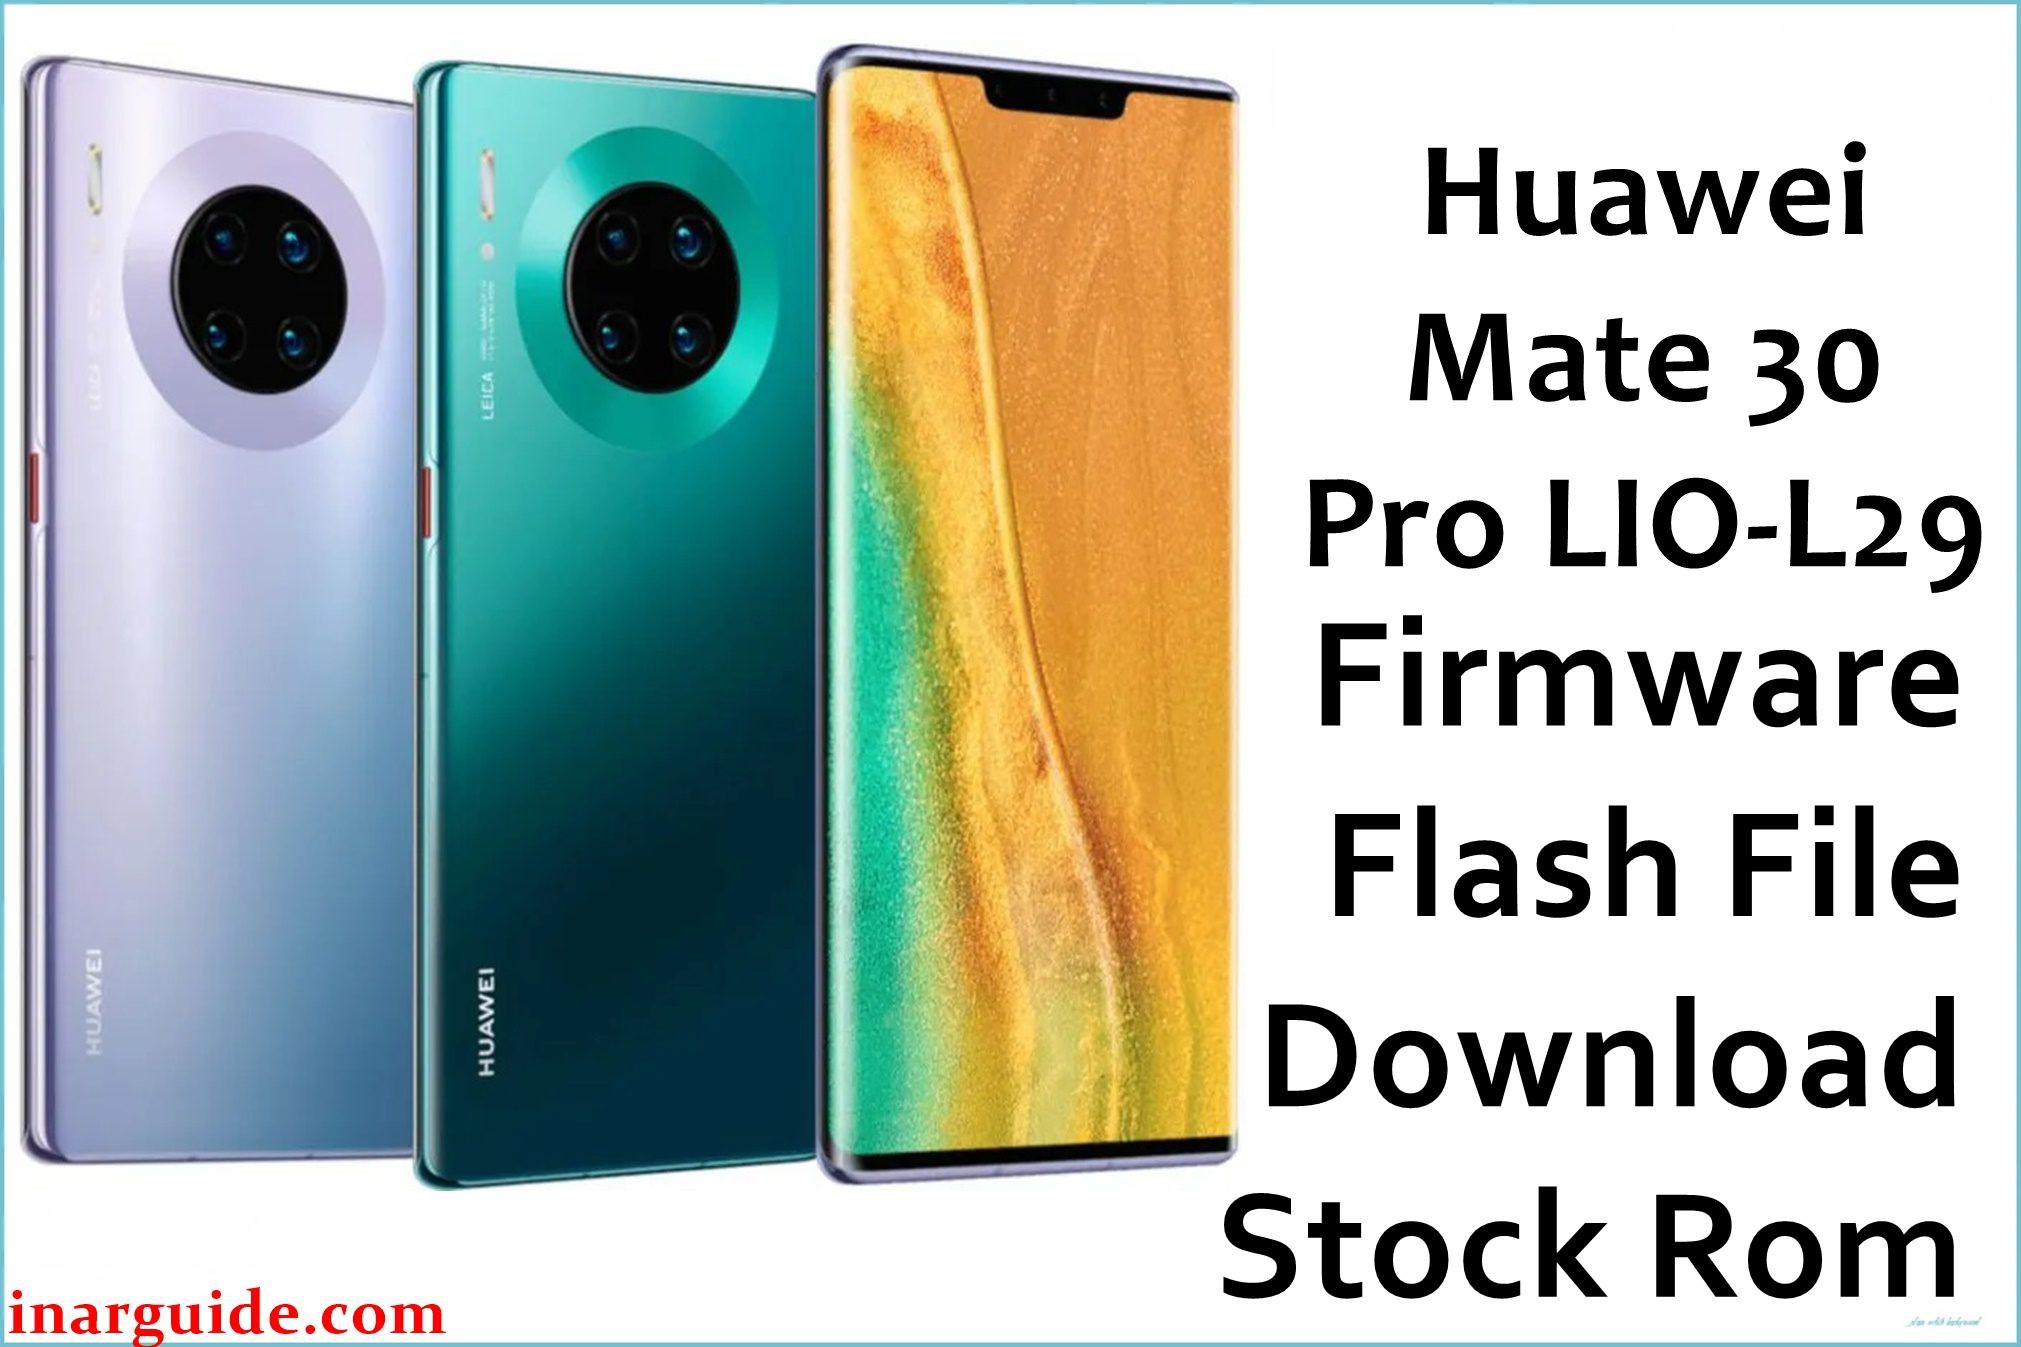 Huawei Mate 30 Pro LIO L29